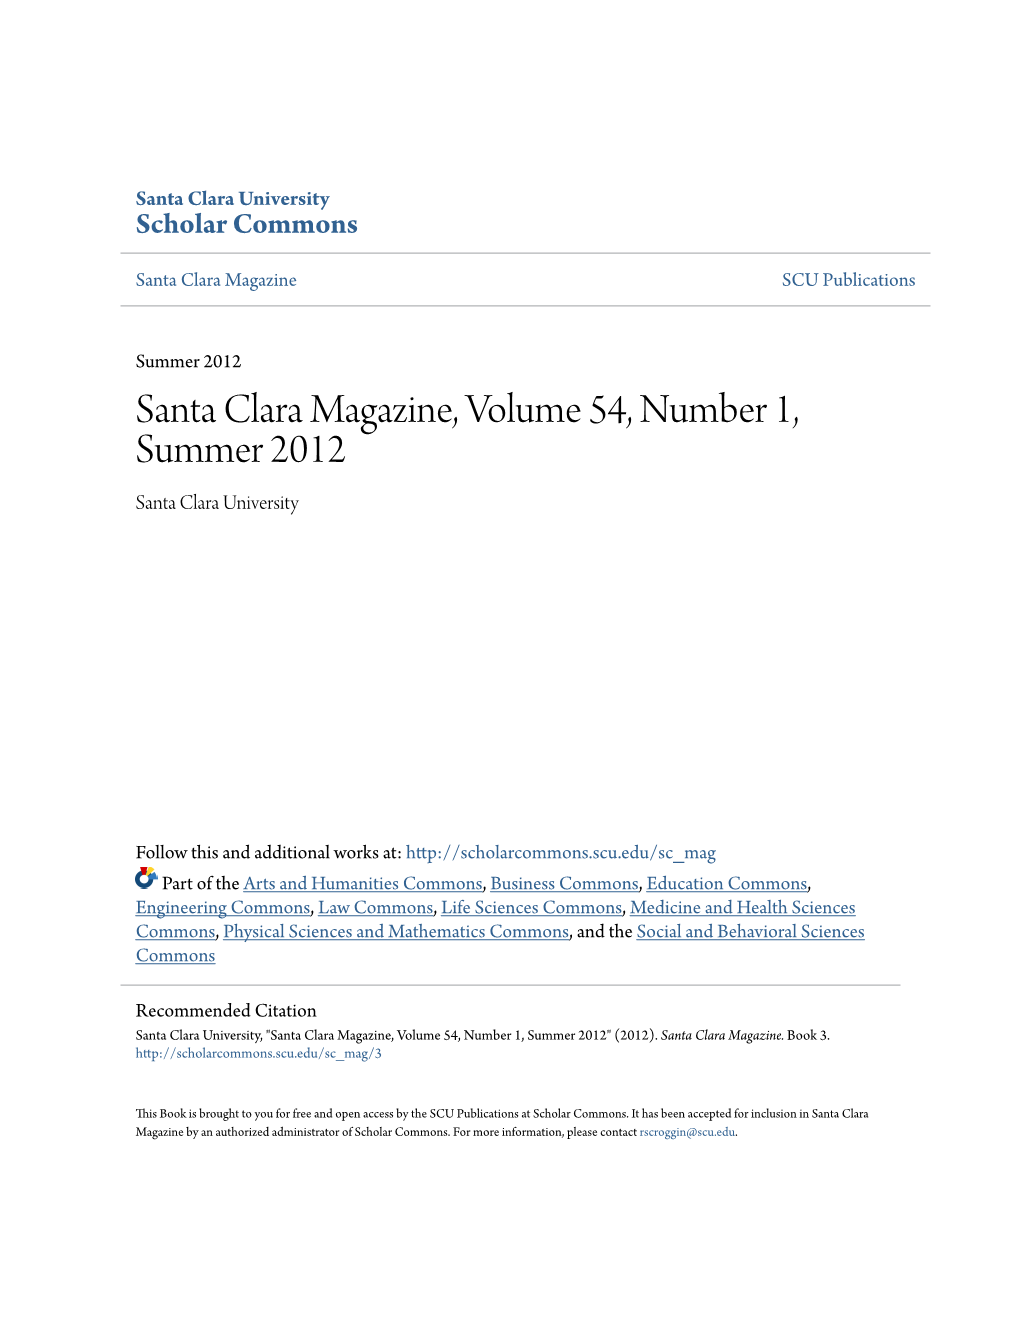 Santa Clara Magazine, Volume 54, Number 1, Summer 2012 Santa Clara University